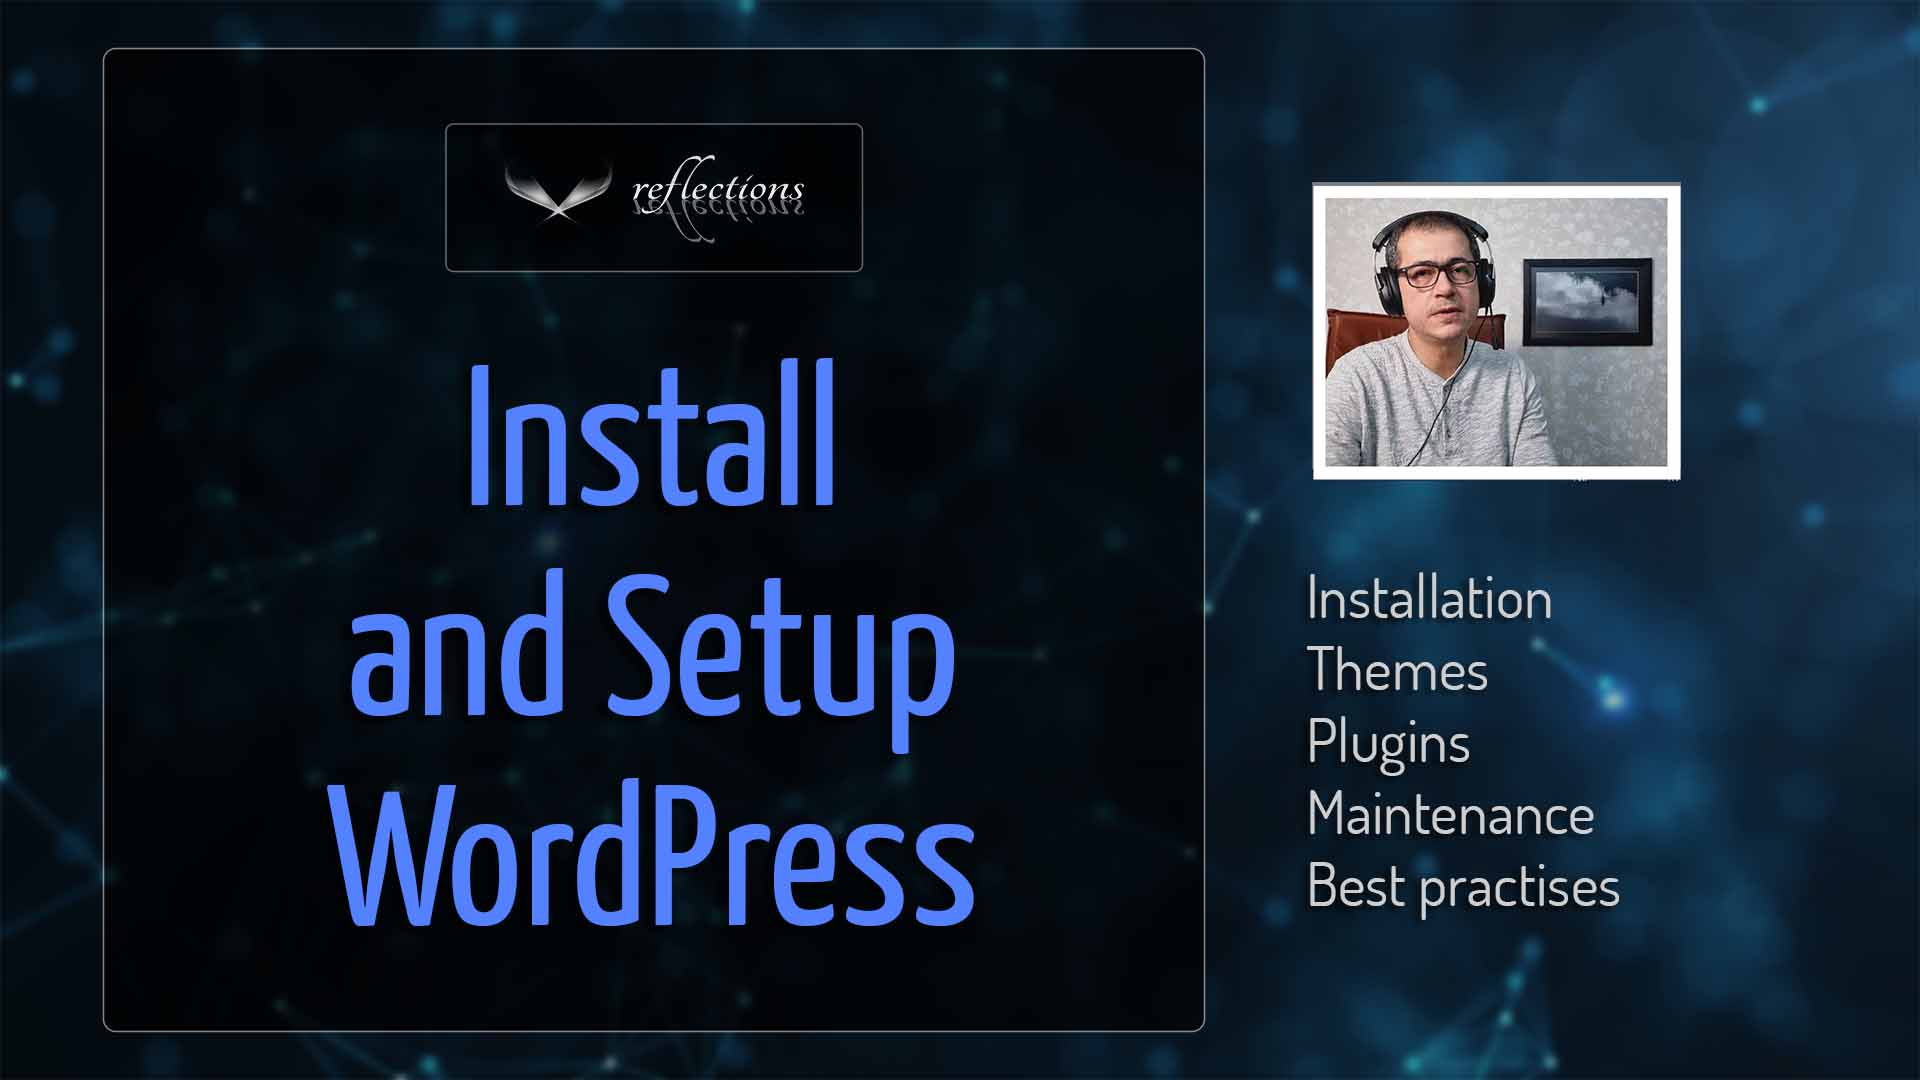 How to Install and Setup WordPress